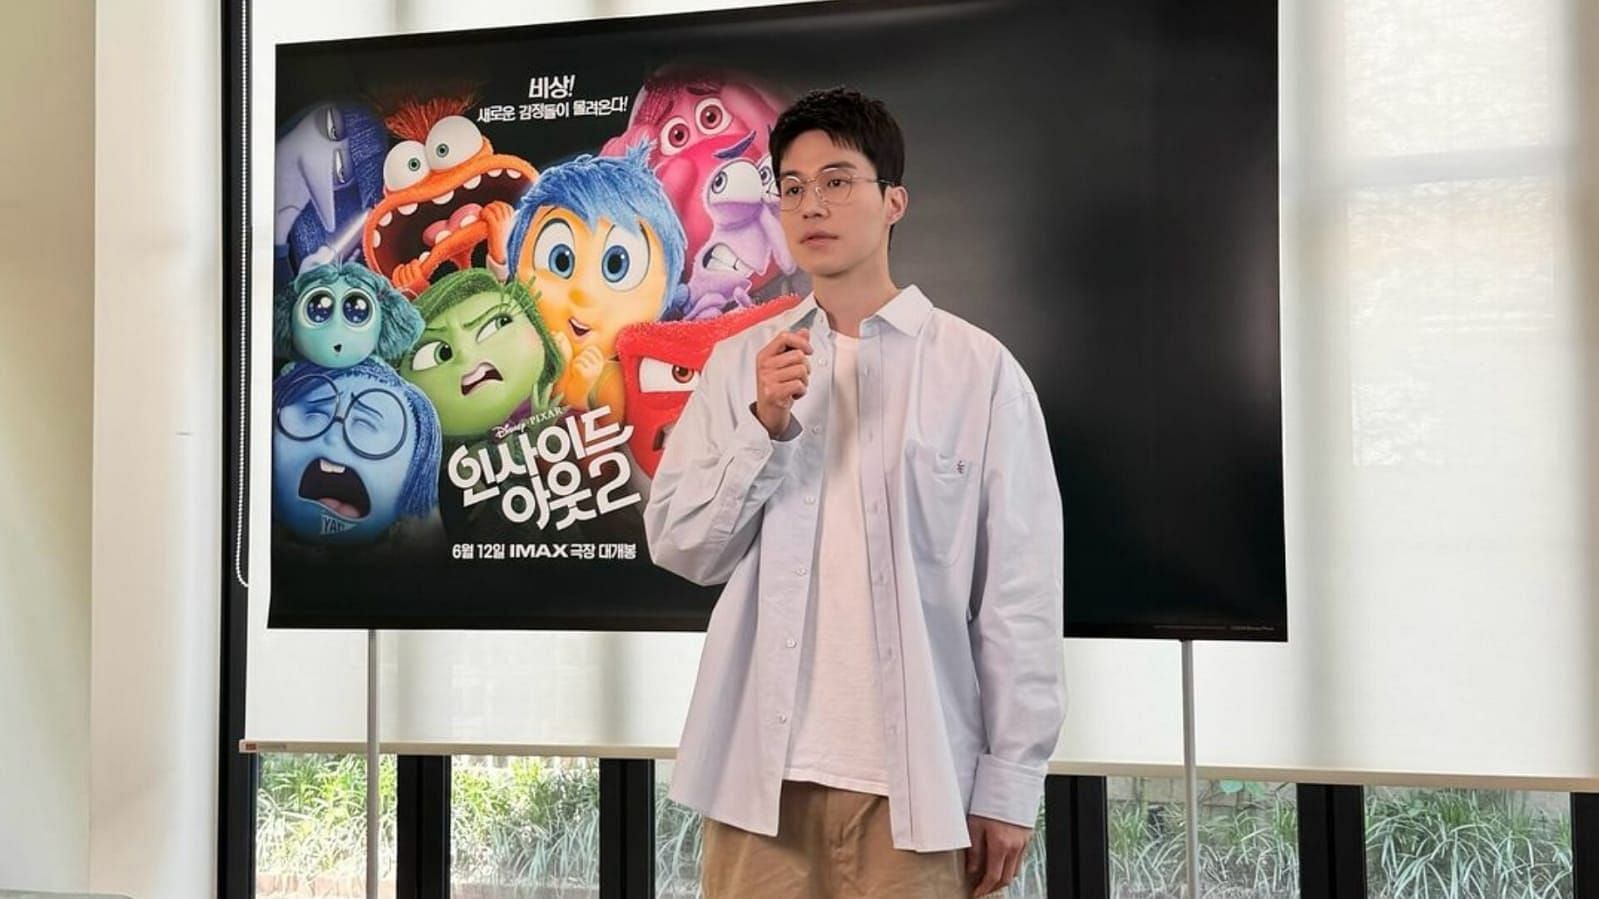 Actor Lee Dong-wook to make voice acting debut in Disney Pixar